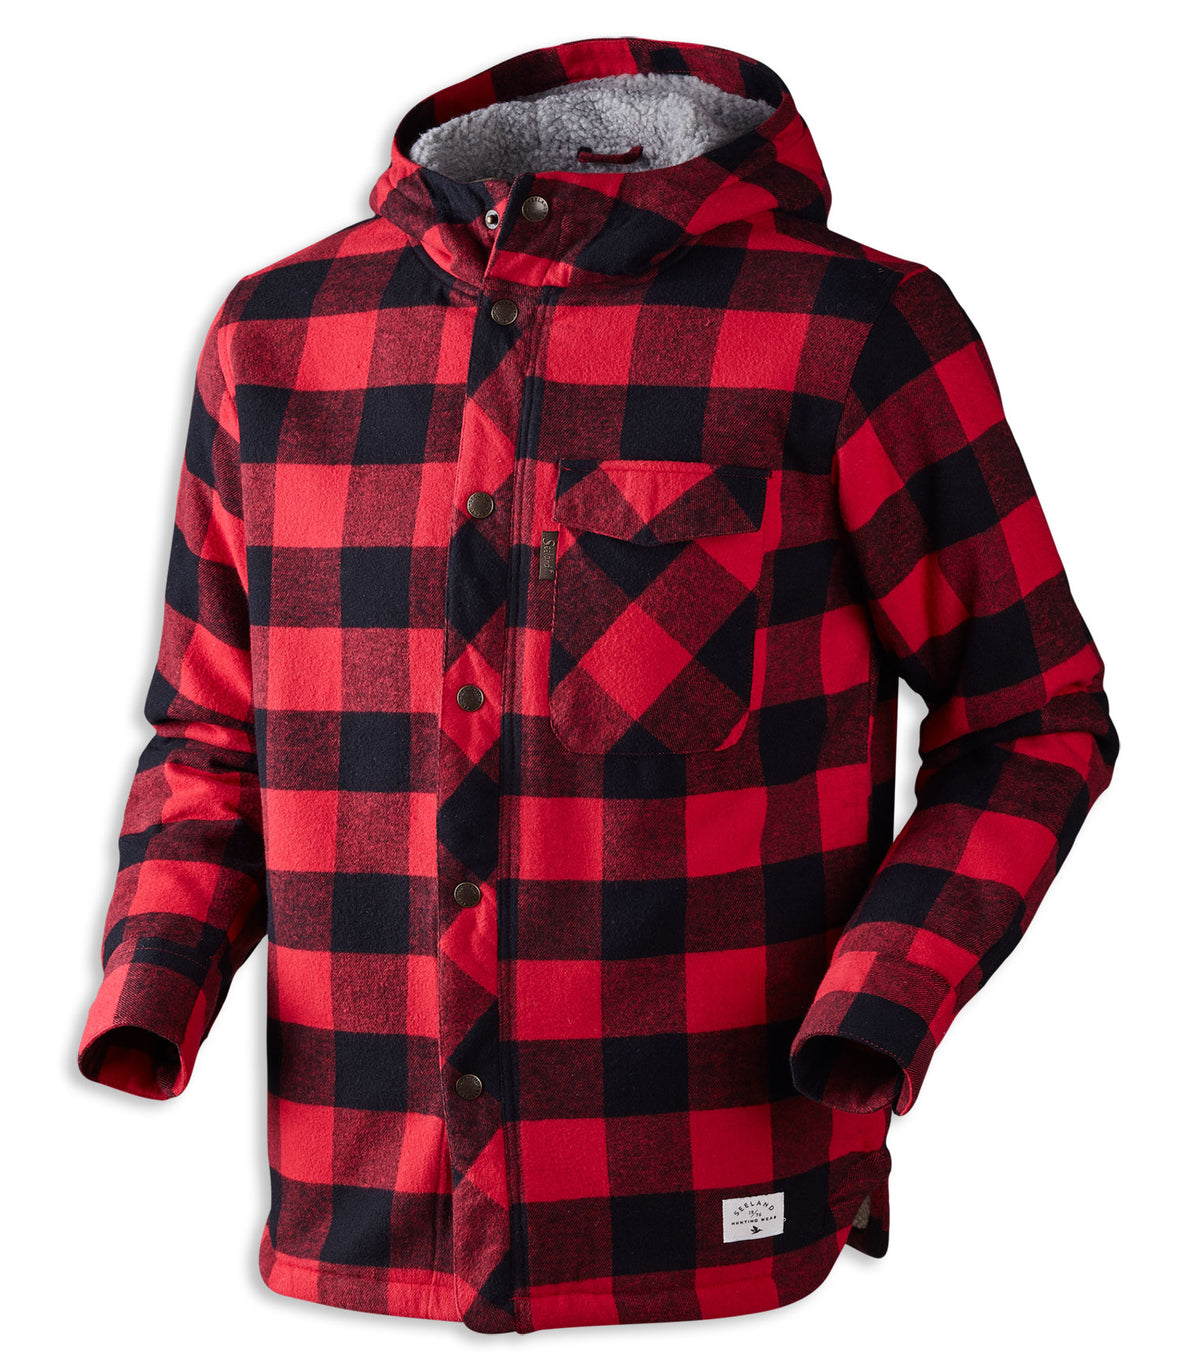 Seeland Canada Jacket | Red Black Lumber jack Check